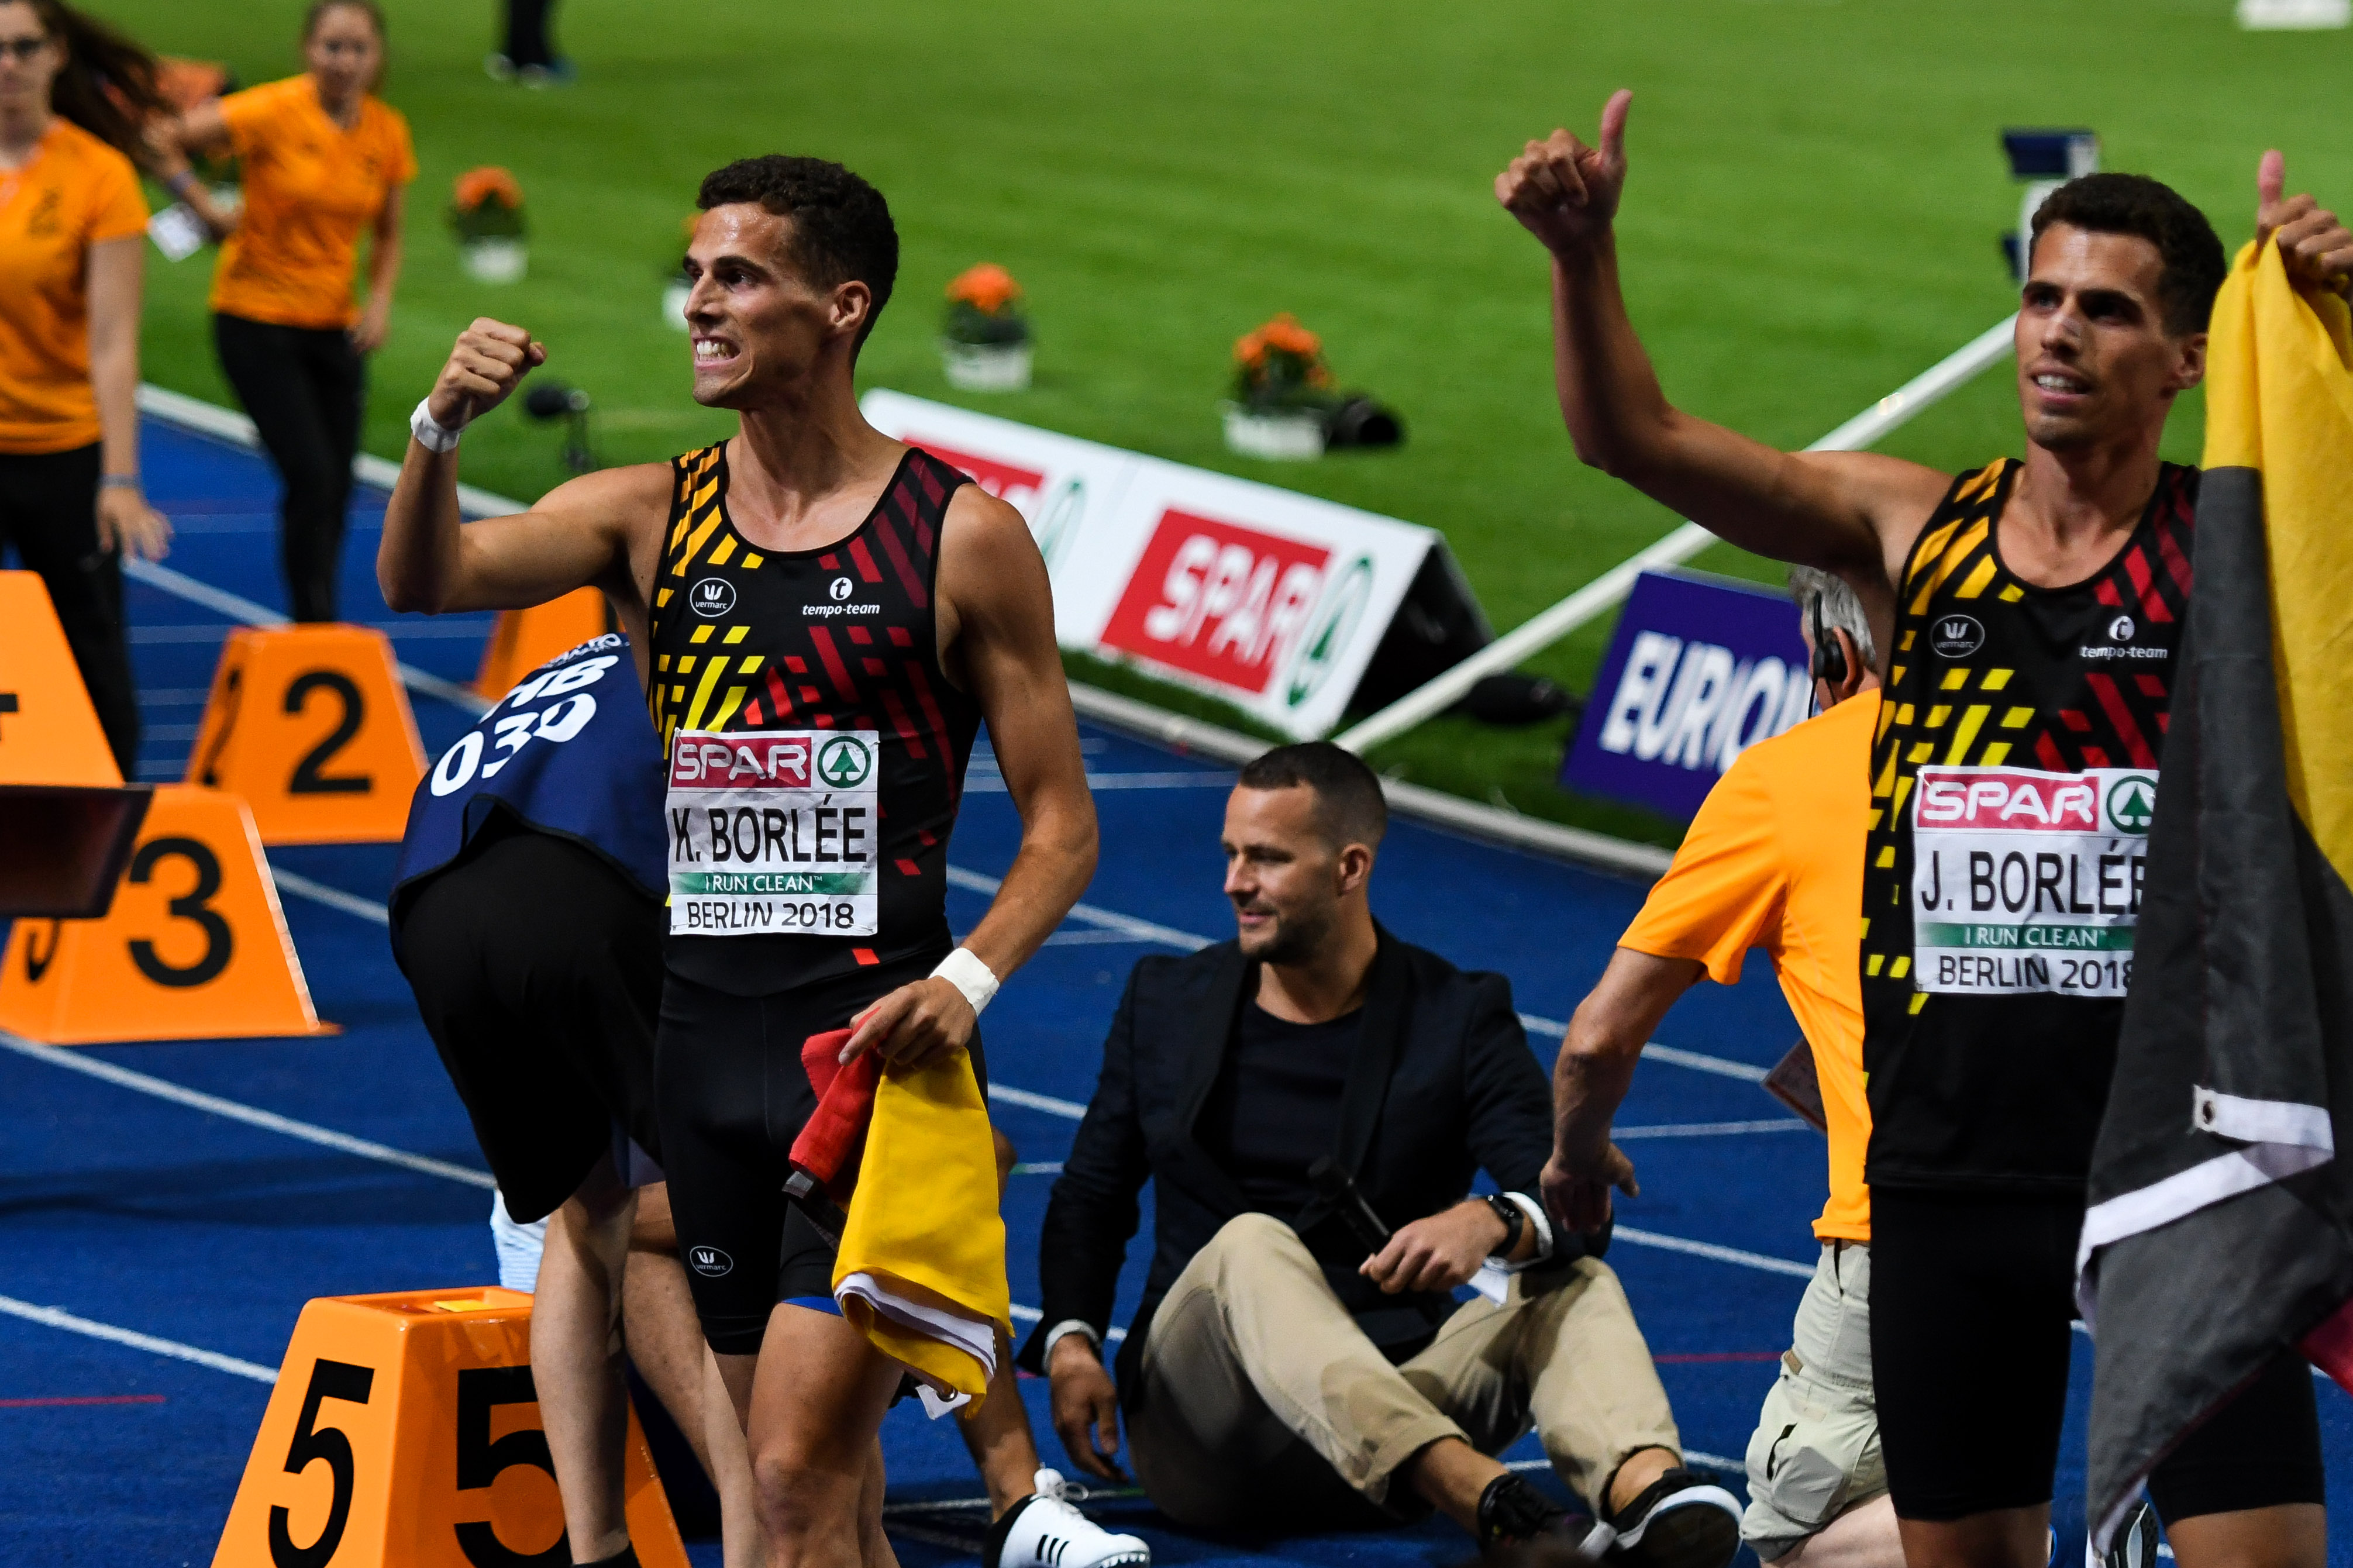 Jonathan en Kevin Borlee 400m Berlijn 2018